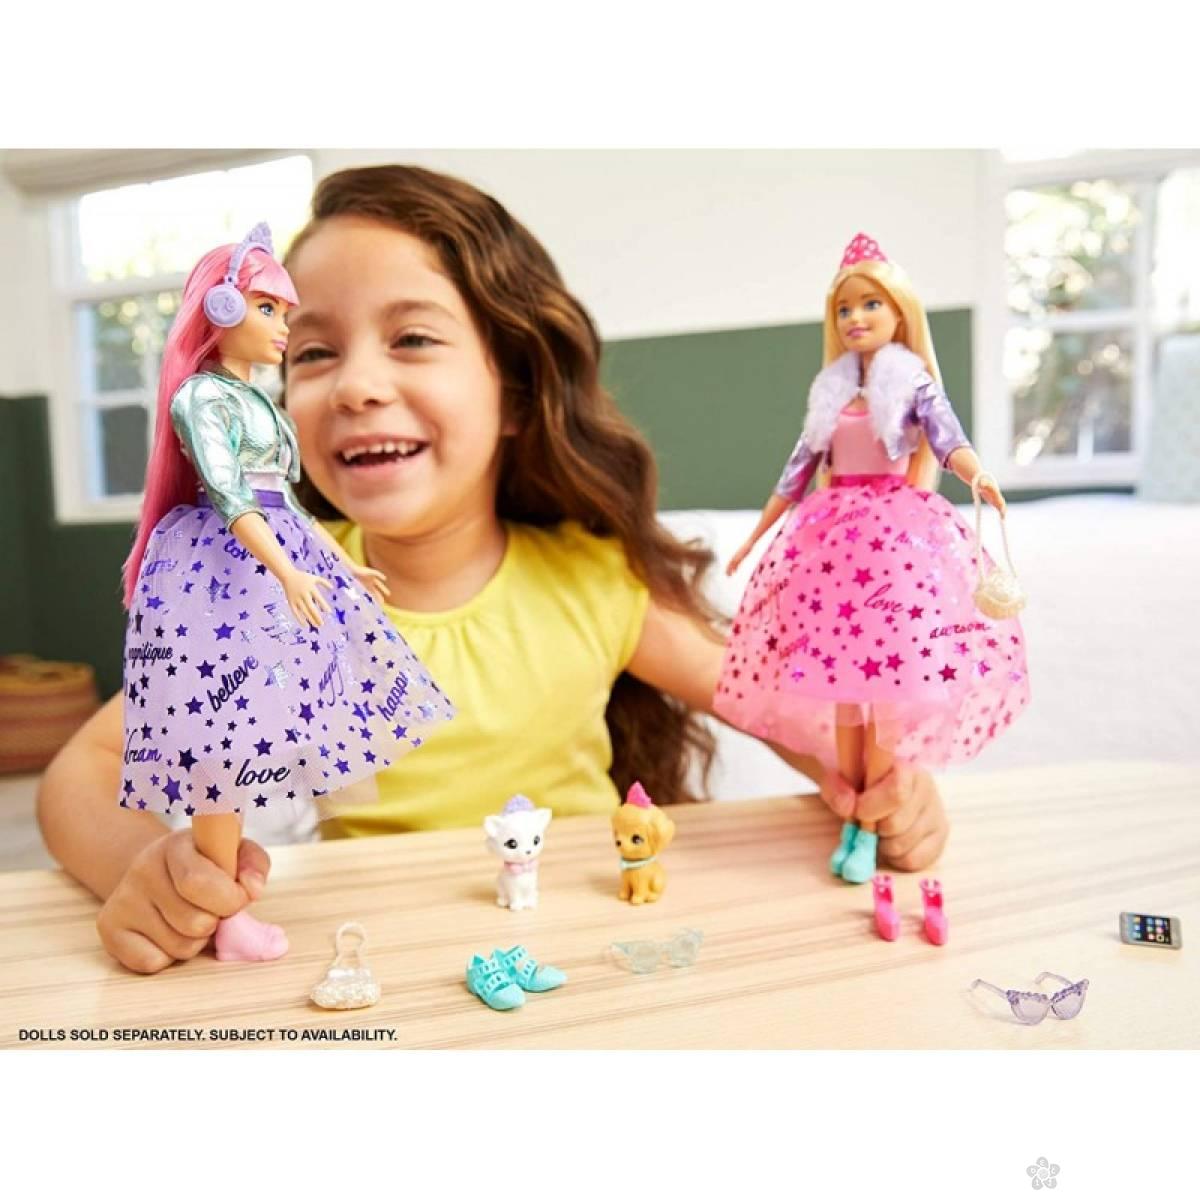 Barbie lutka Adventure Deluxe Princess GML76 